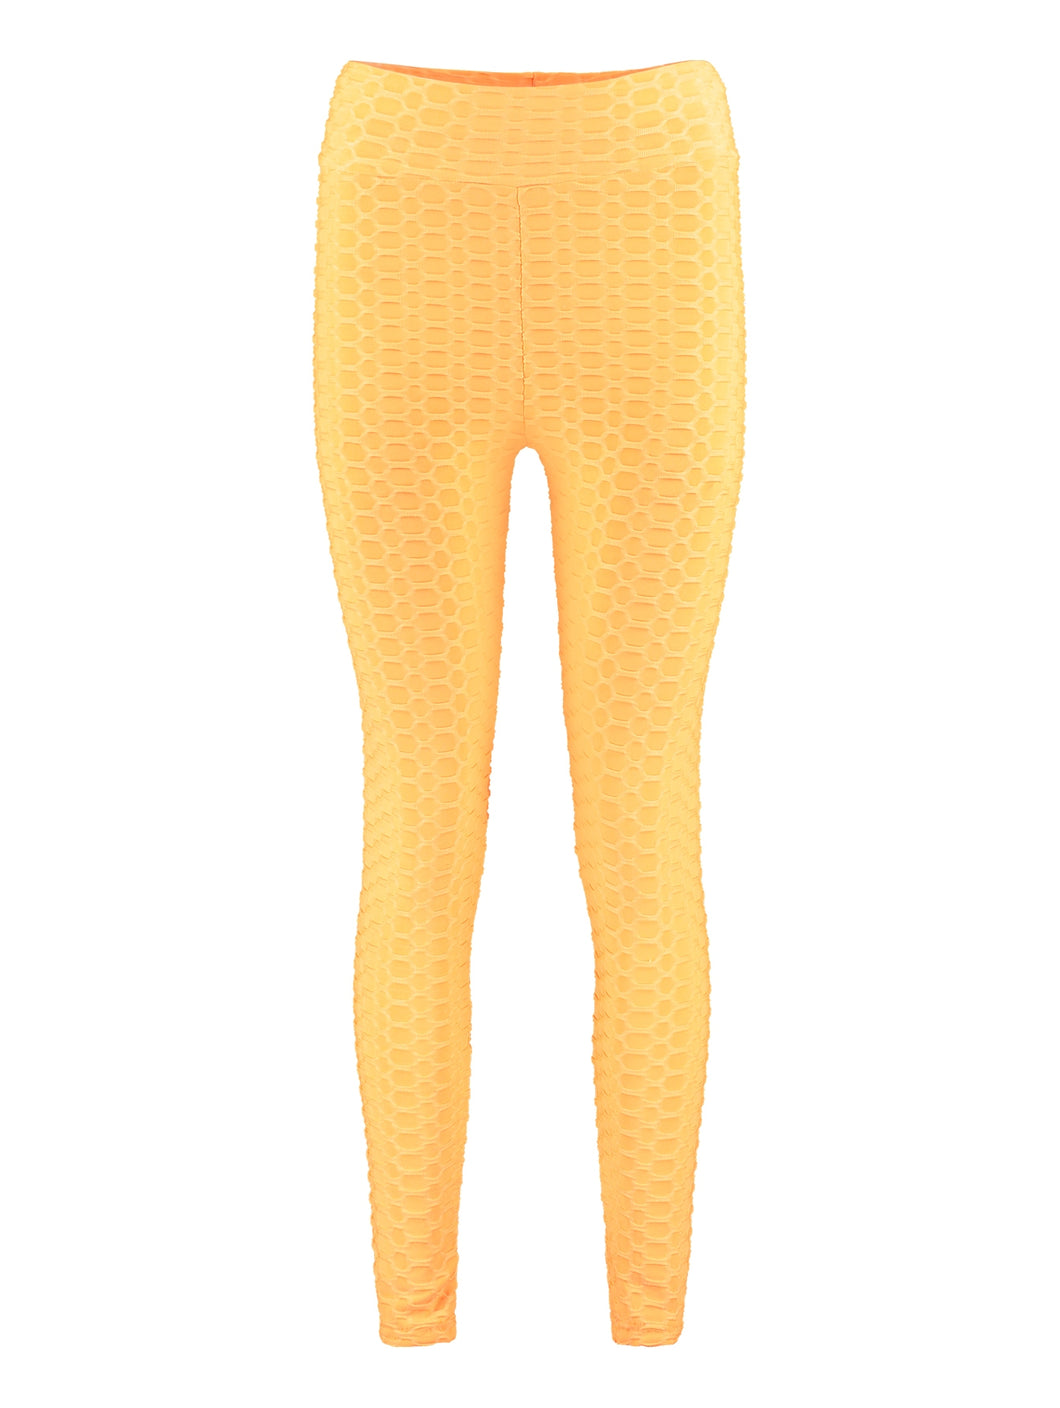 Leggings Gr S/M & L/XL neon orange